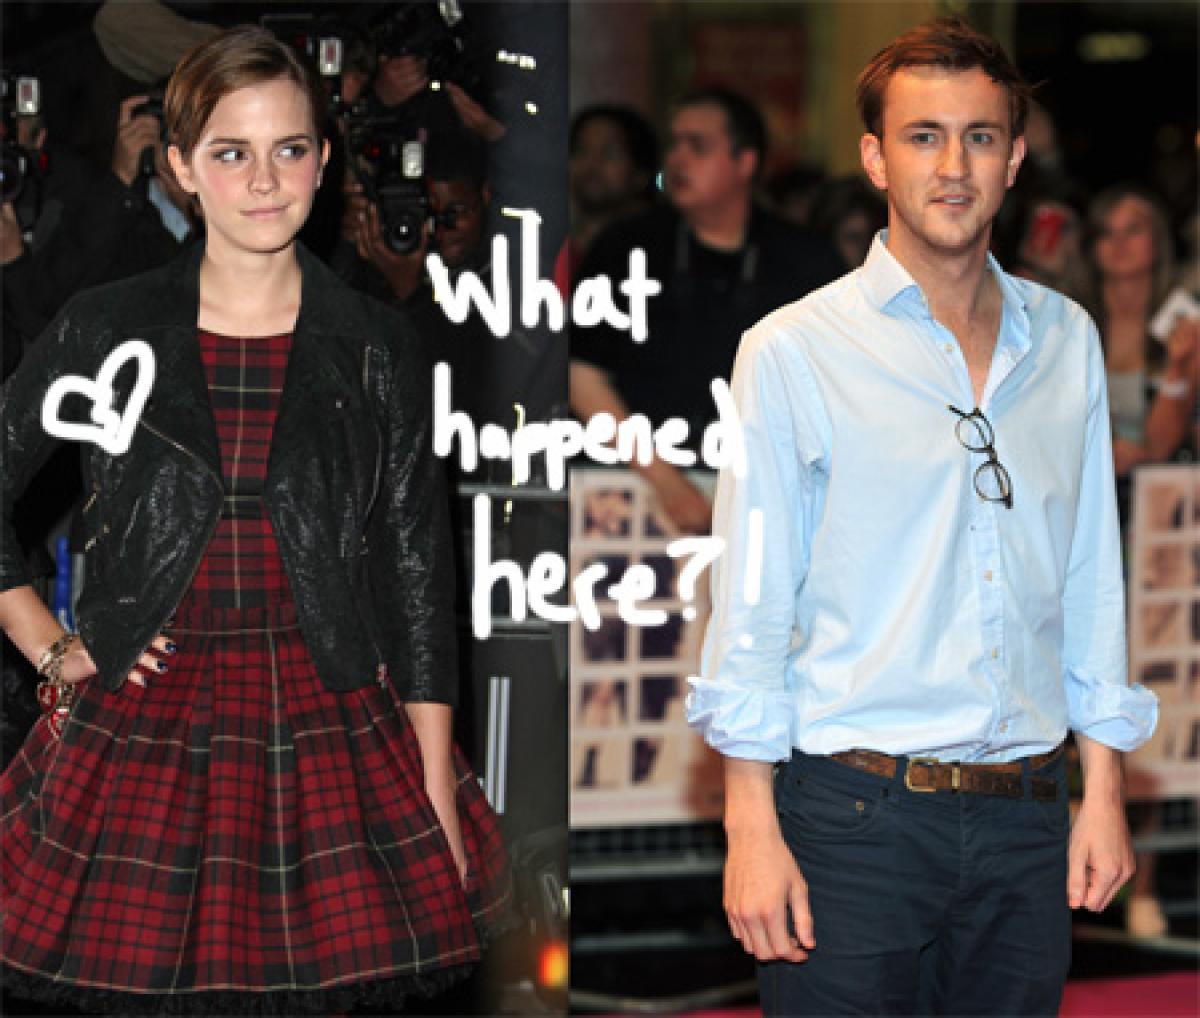 Francis Boulle Emma Watson Hermione Granger dating relationship boyfriend